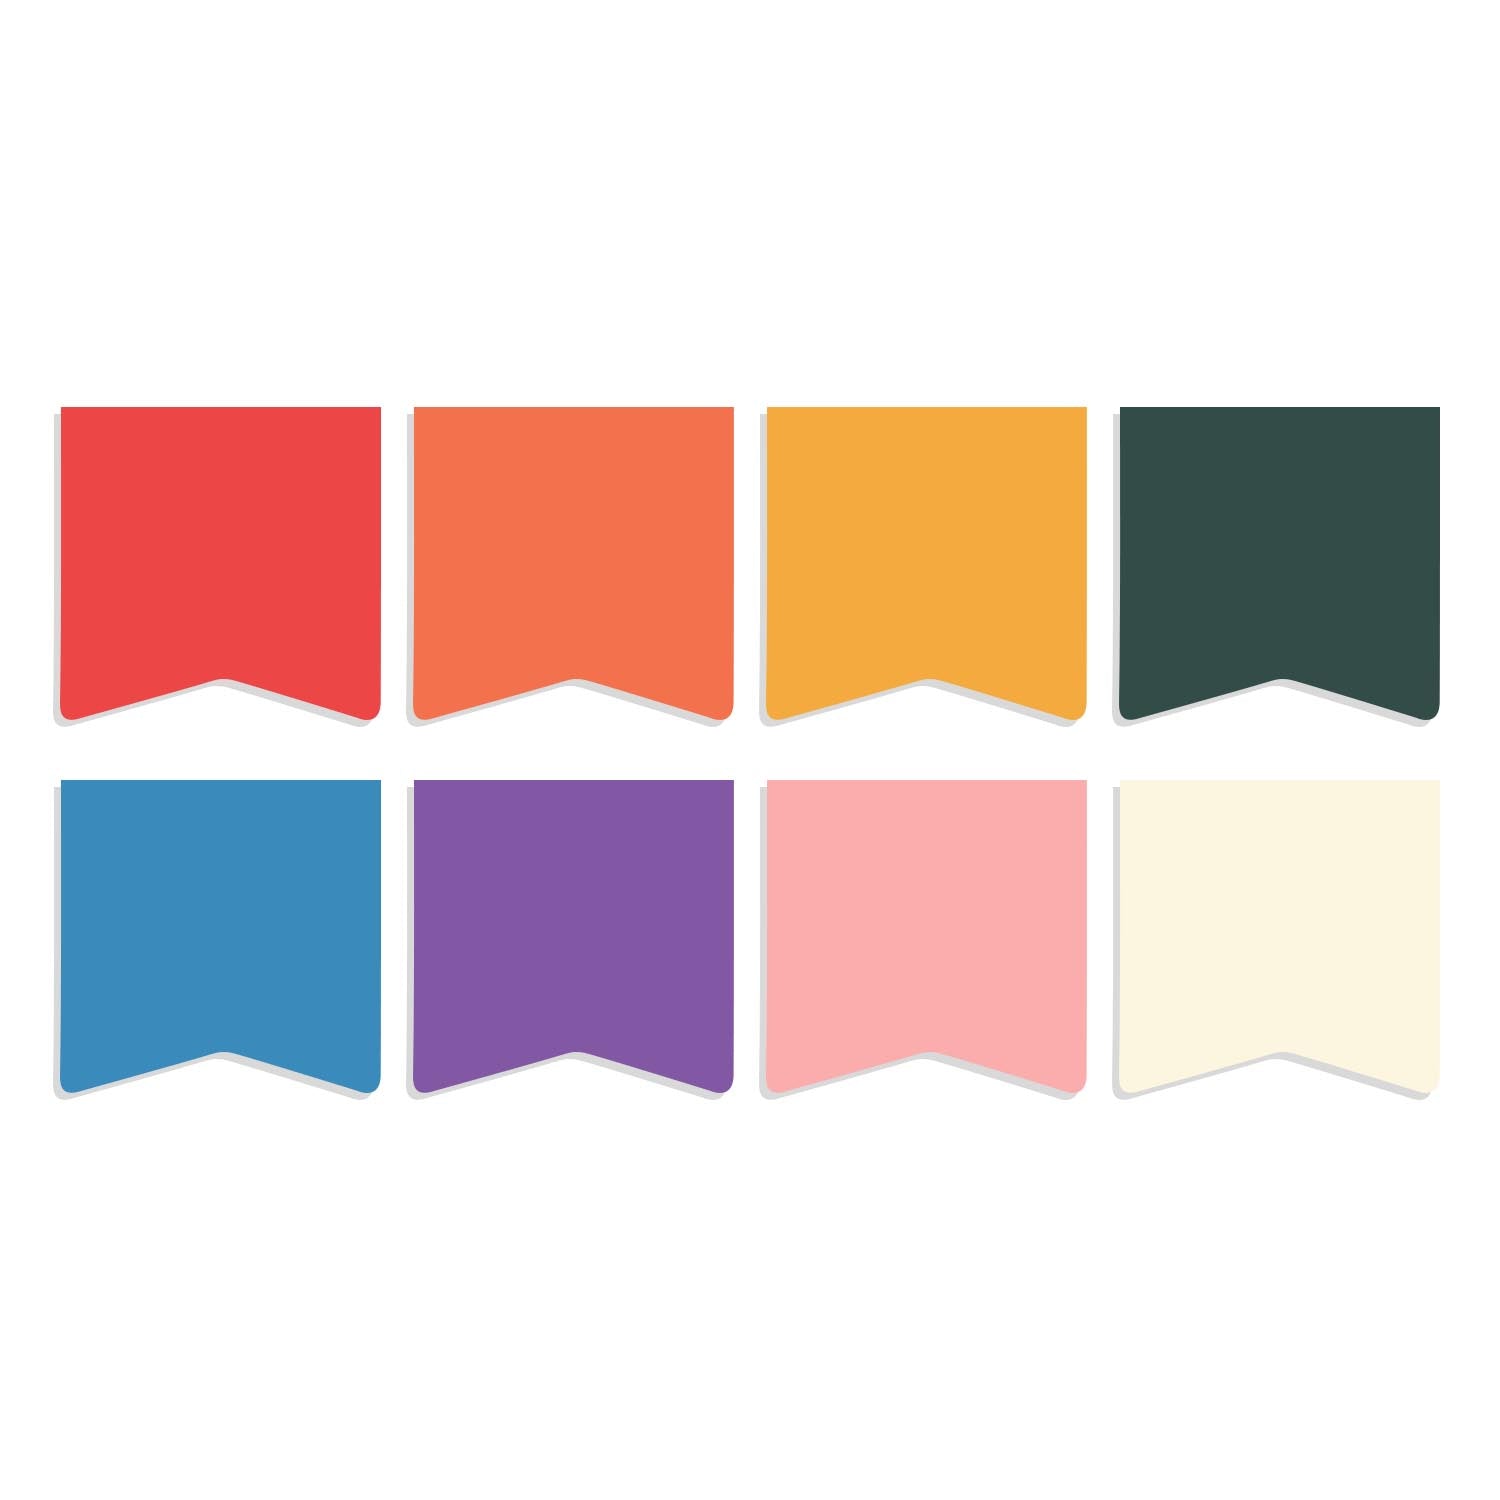 Block Colour Bookmarks - Seconds - Fabulous Planning - 2NDS - BLOCKC - BOOKMARKS